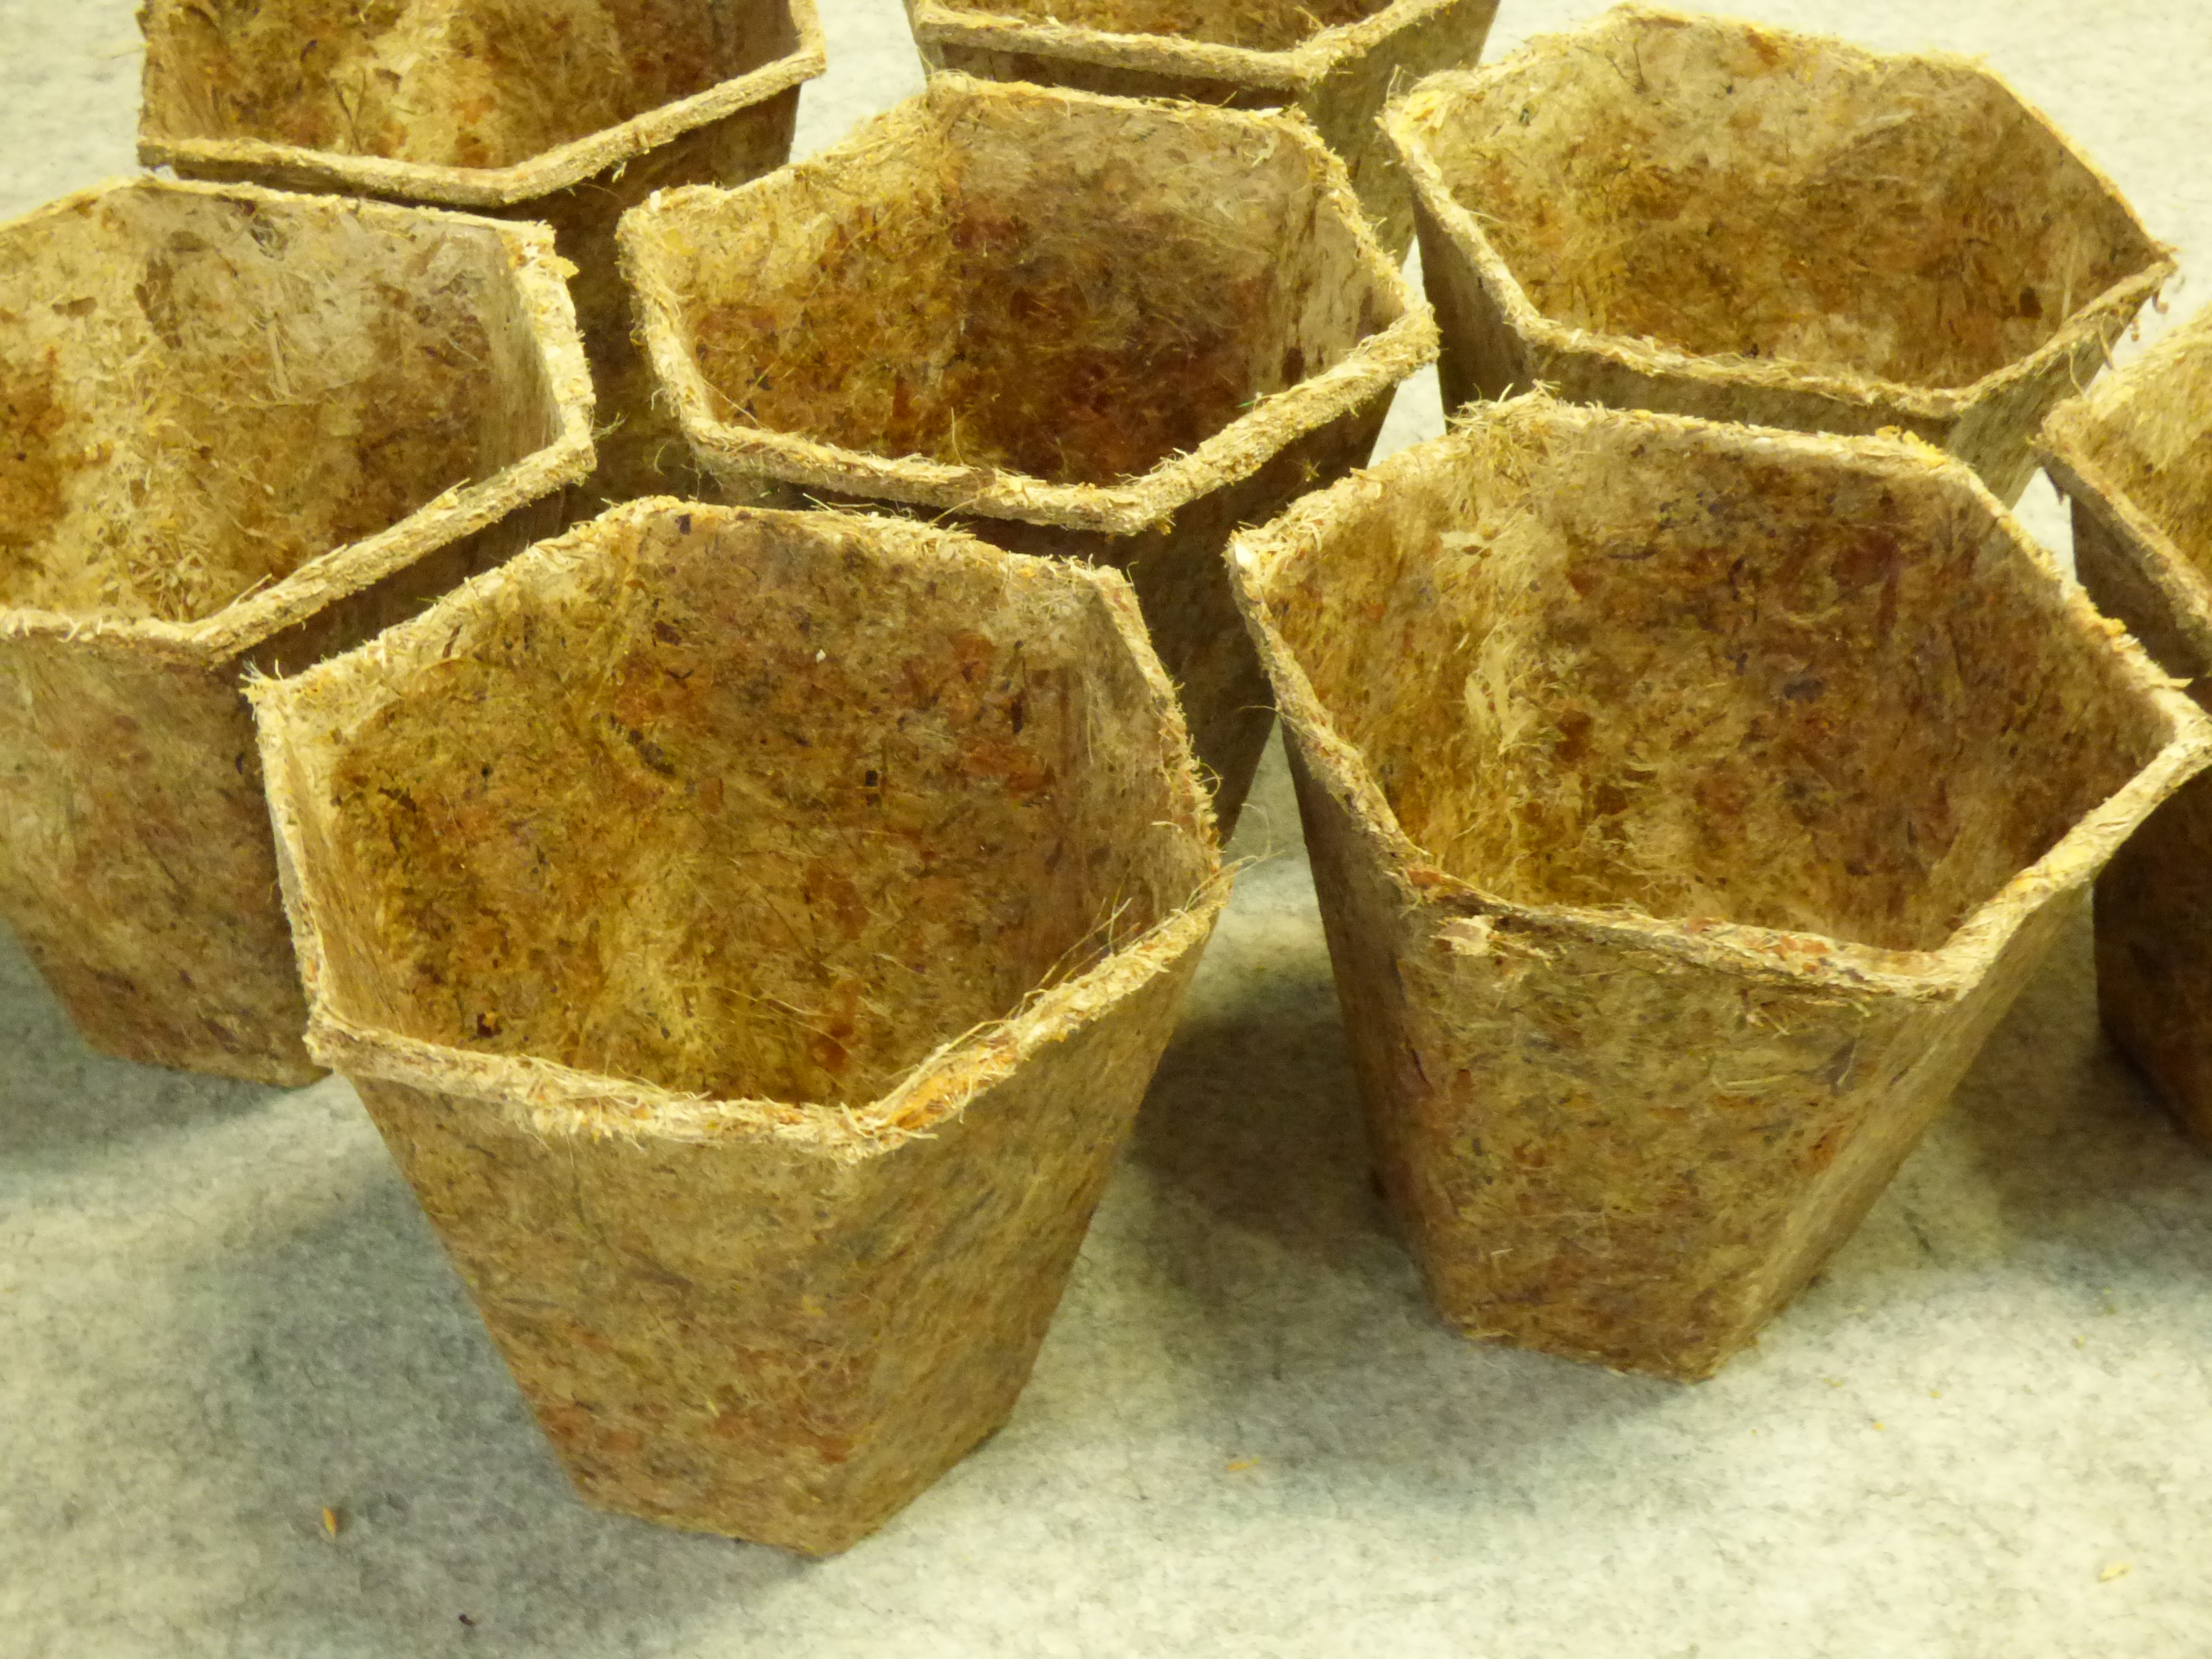 Light brown hexagonal pots made of grass and reed